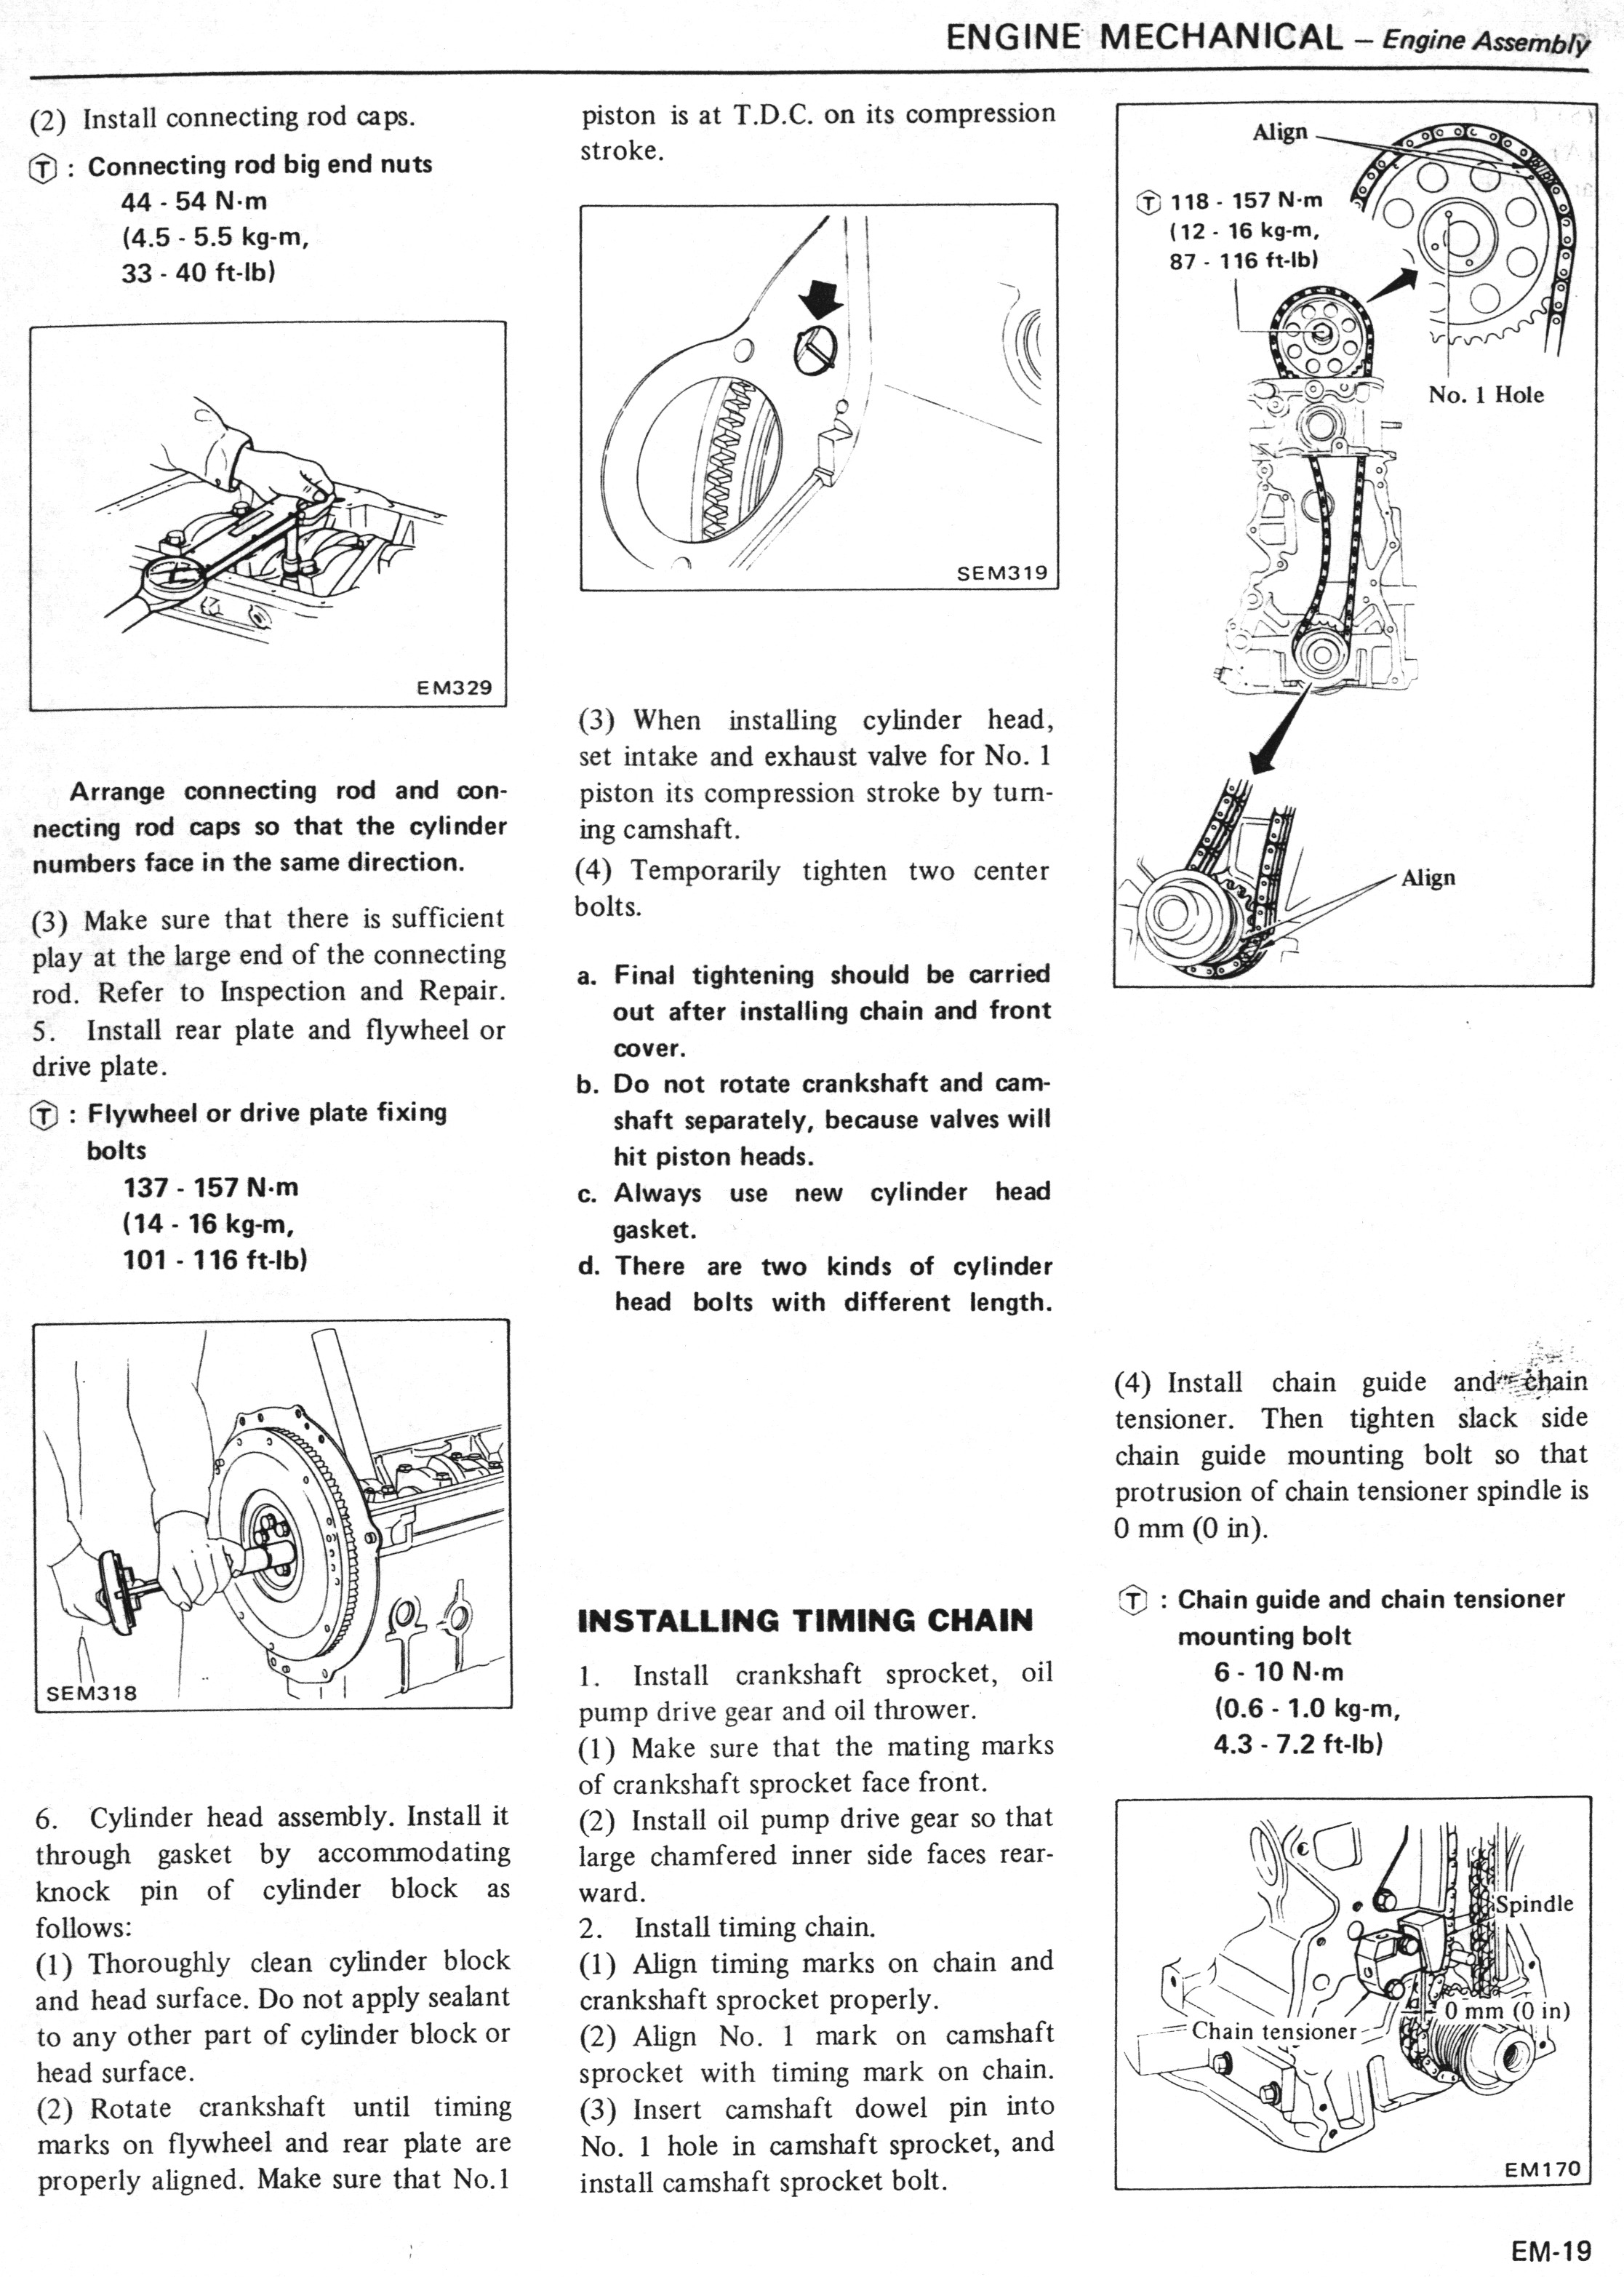 manual de motor nissan ld28